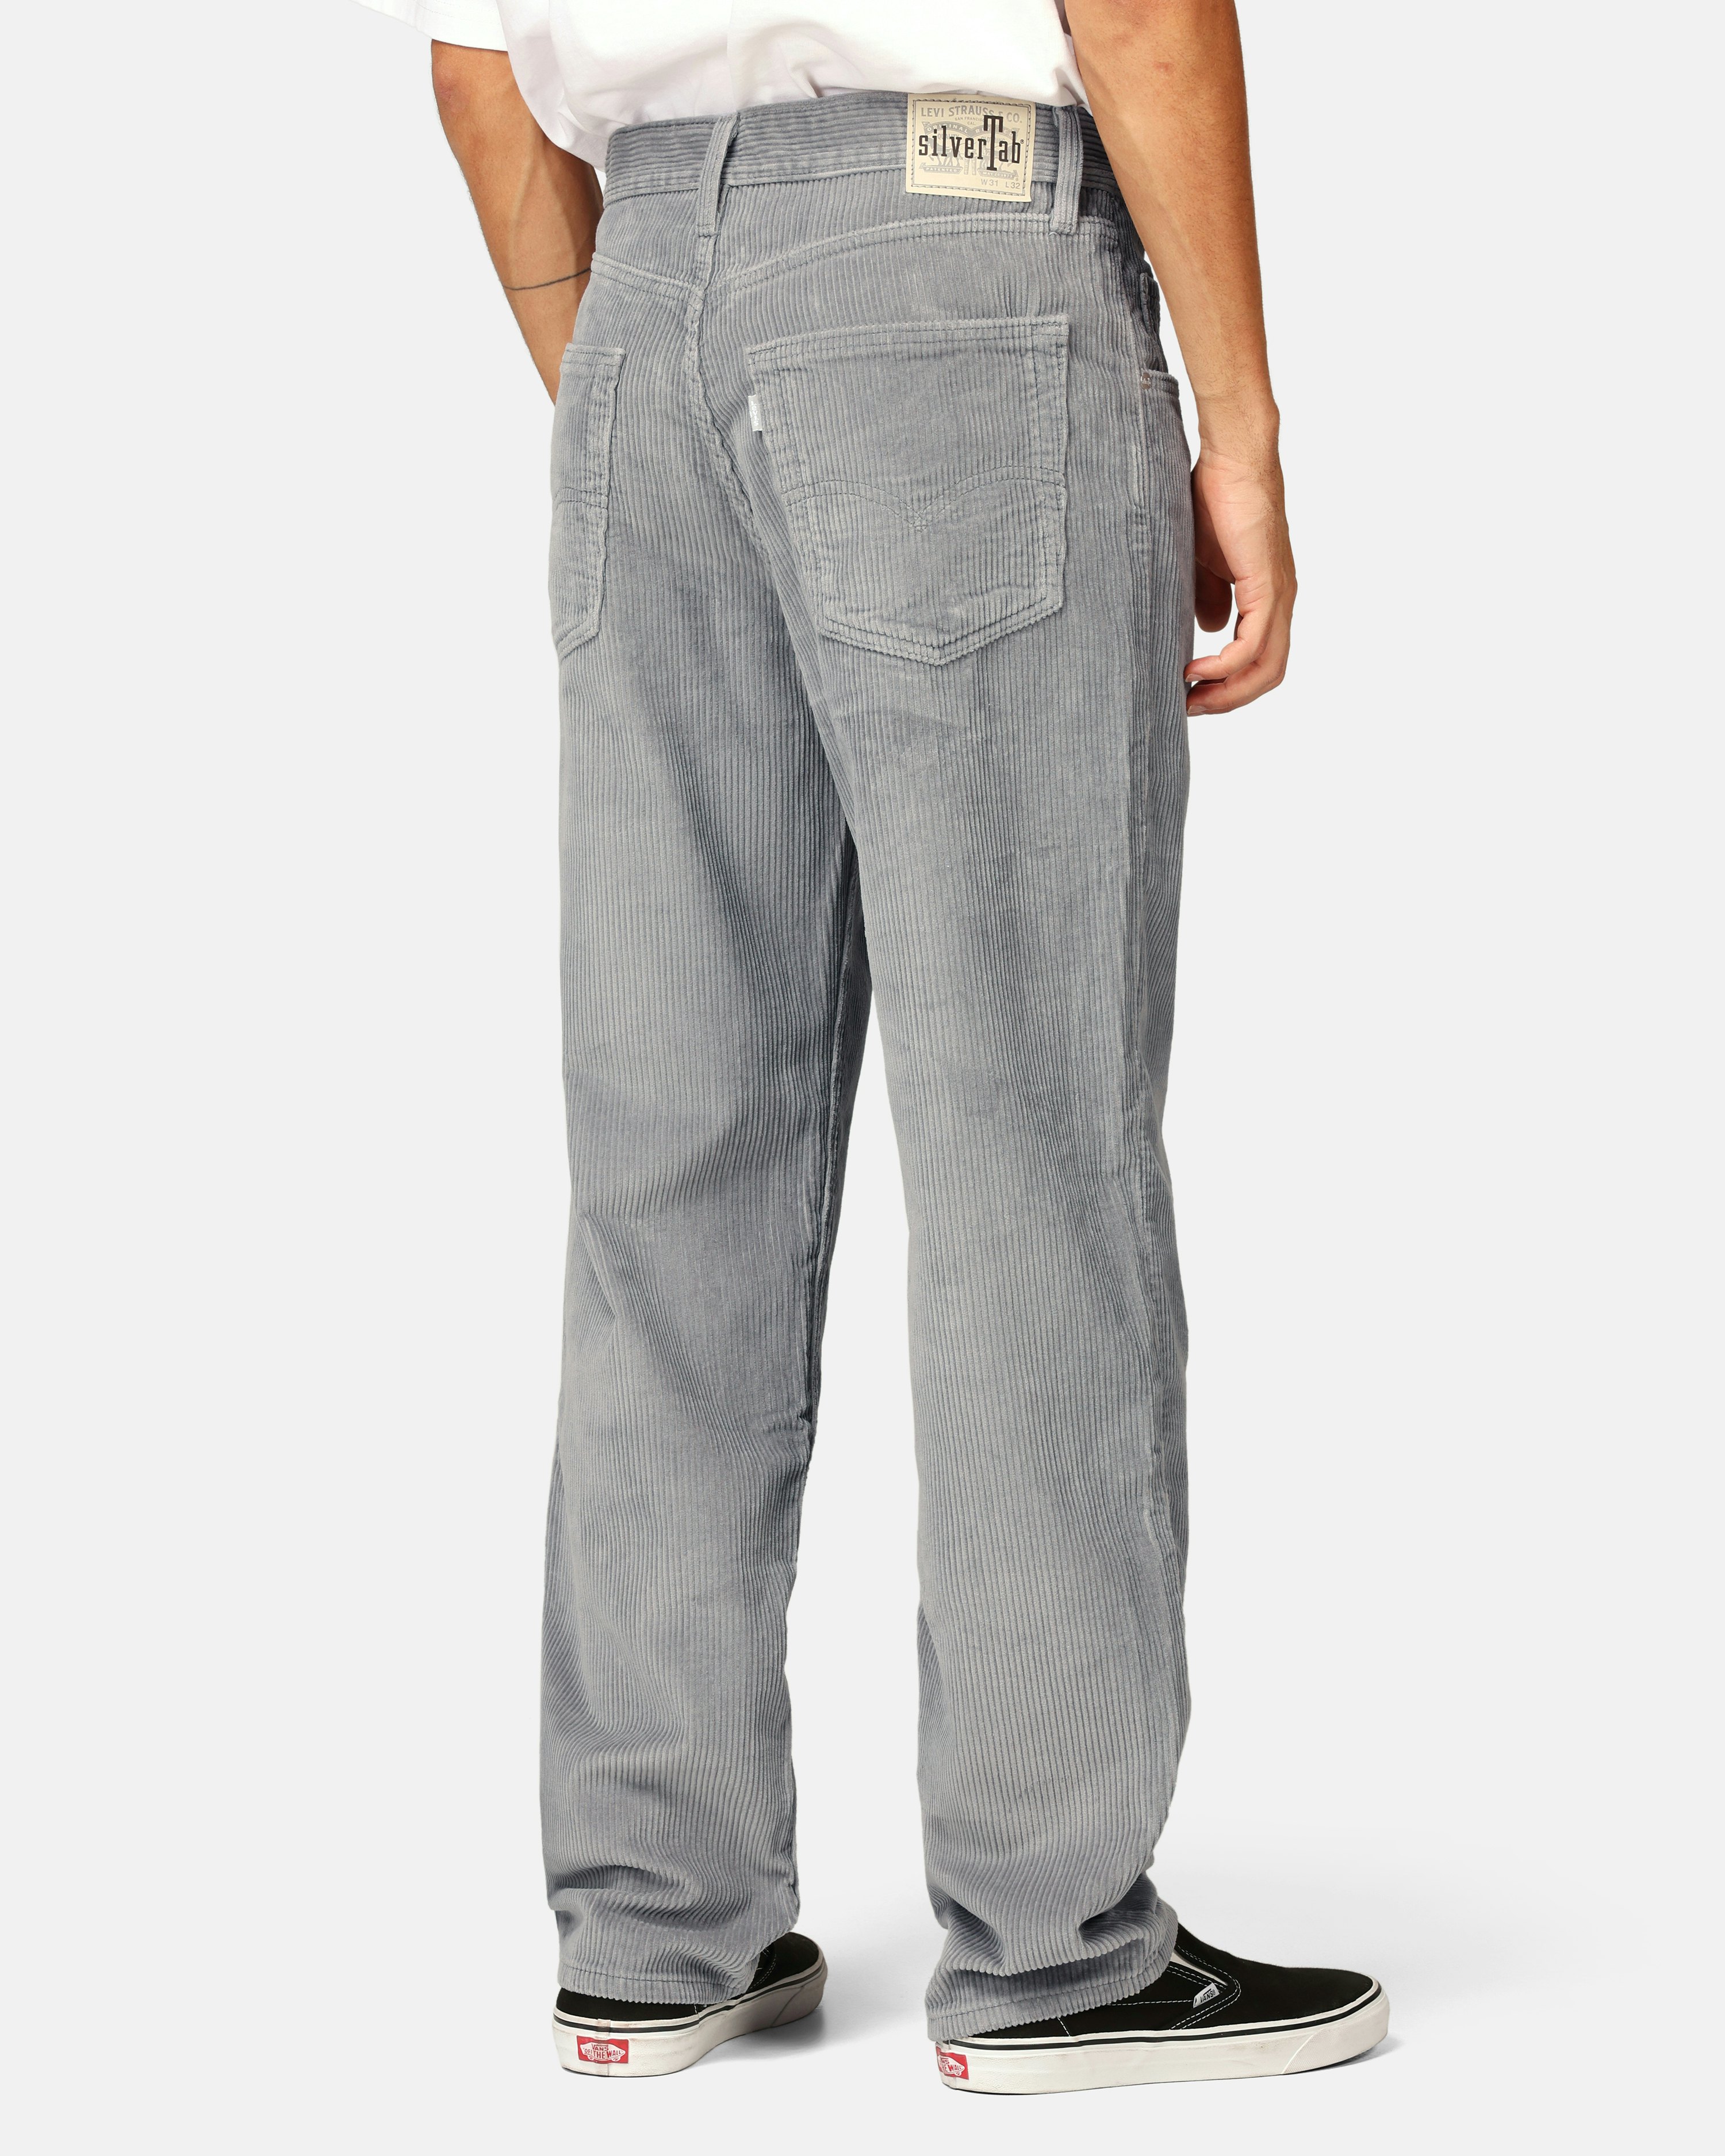 Levi's Silvertab™ Loose Jeans Light grey | Men | Junkyard